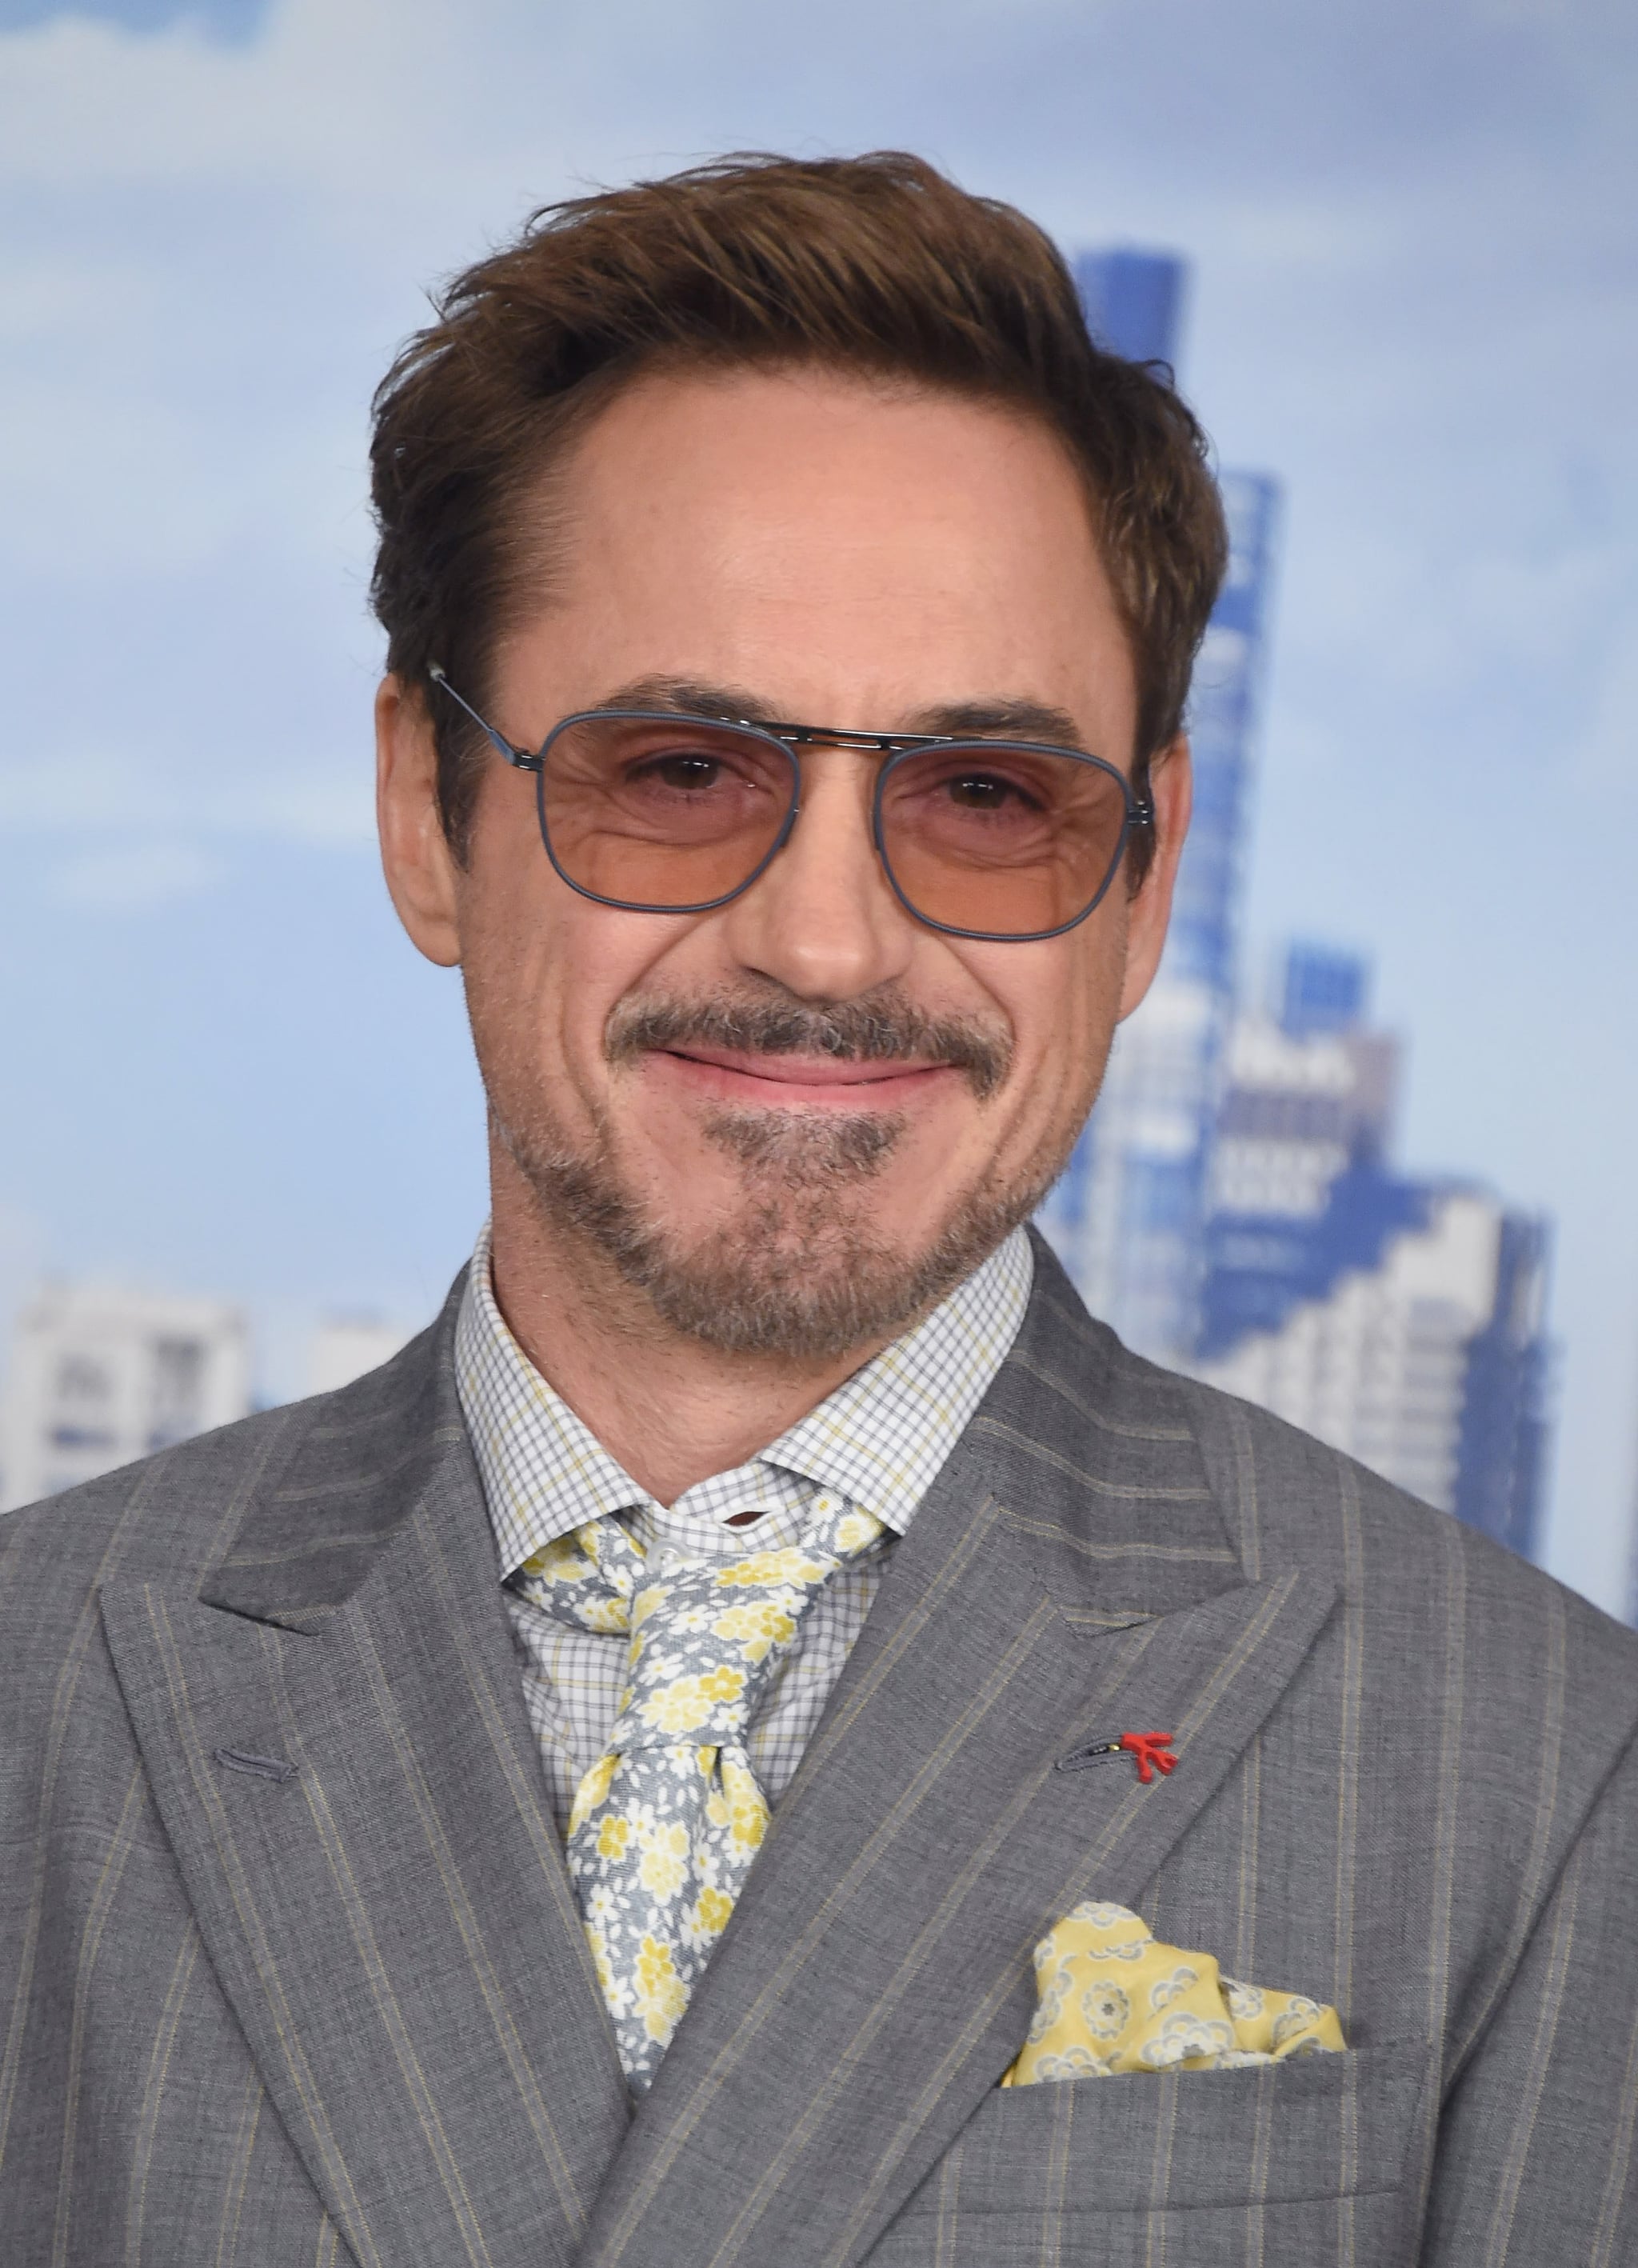 Robert Downey Jr. | POPSUGAR Entertainment